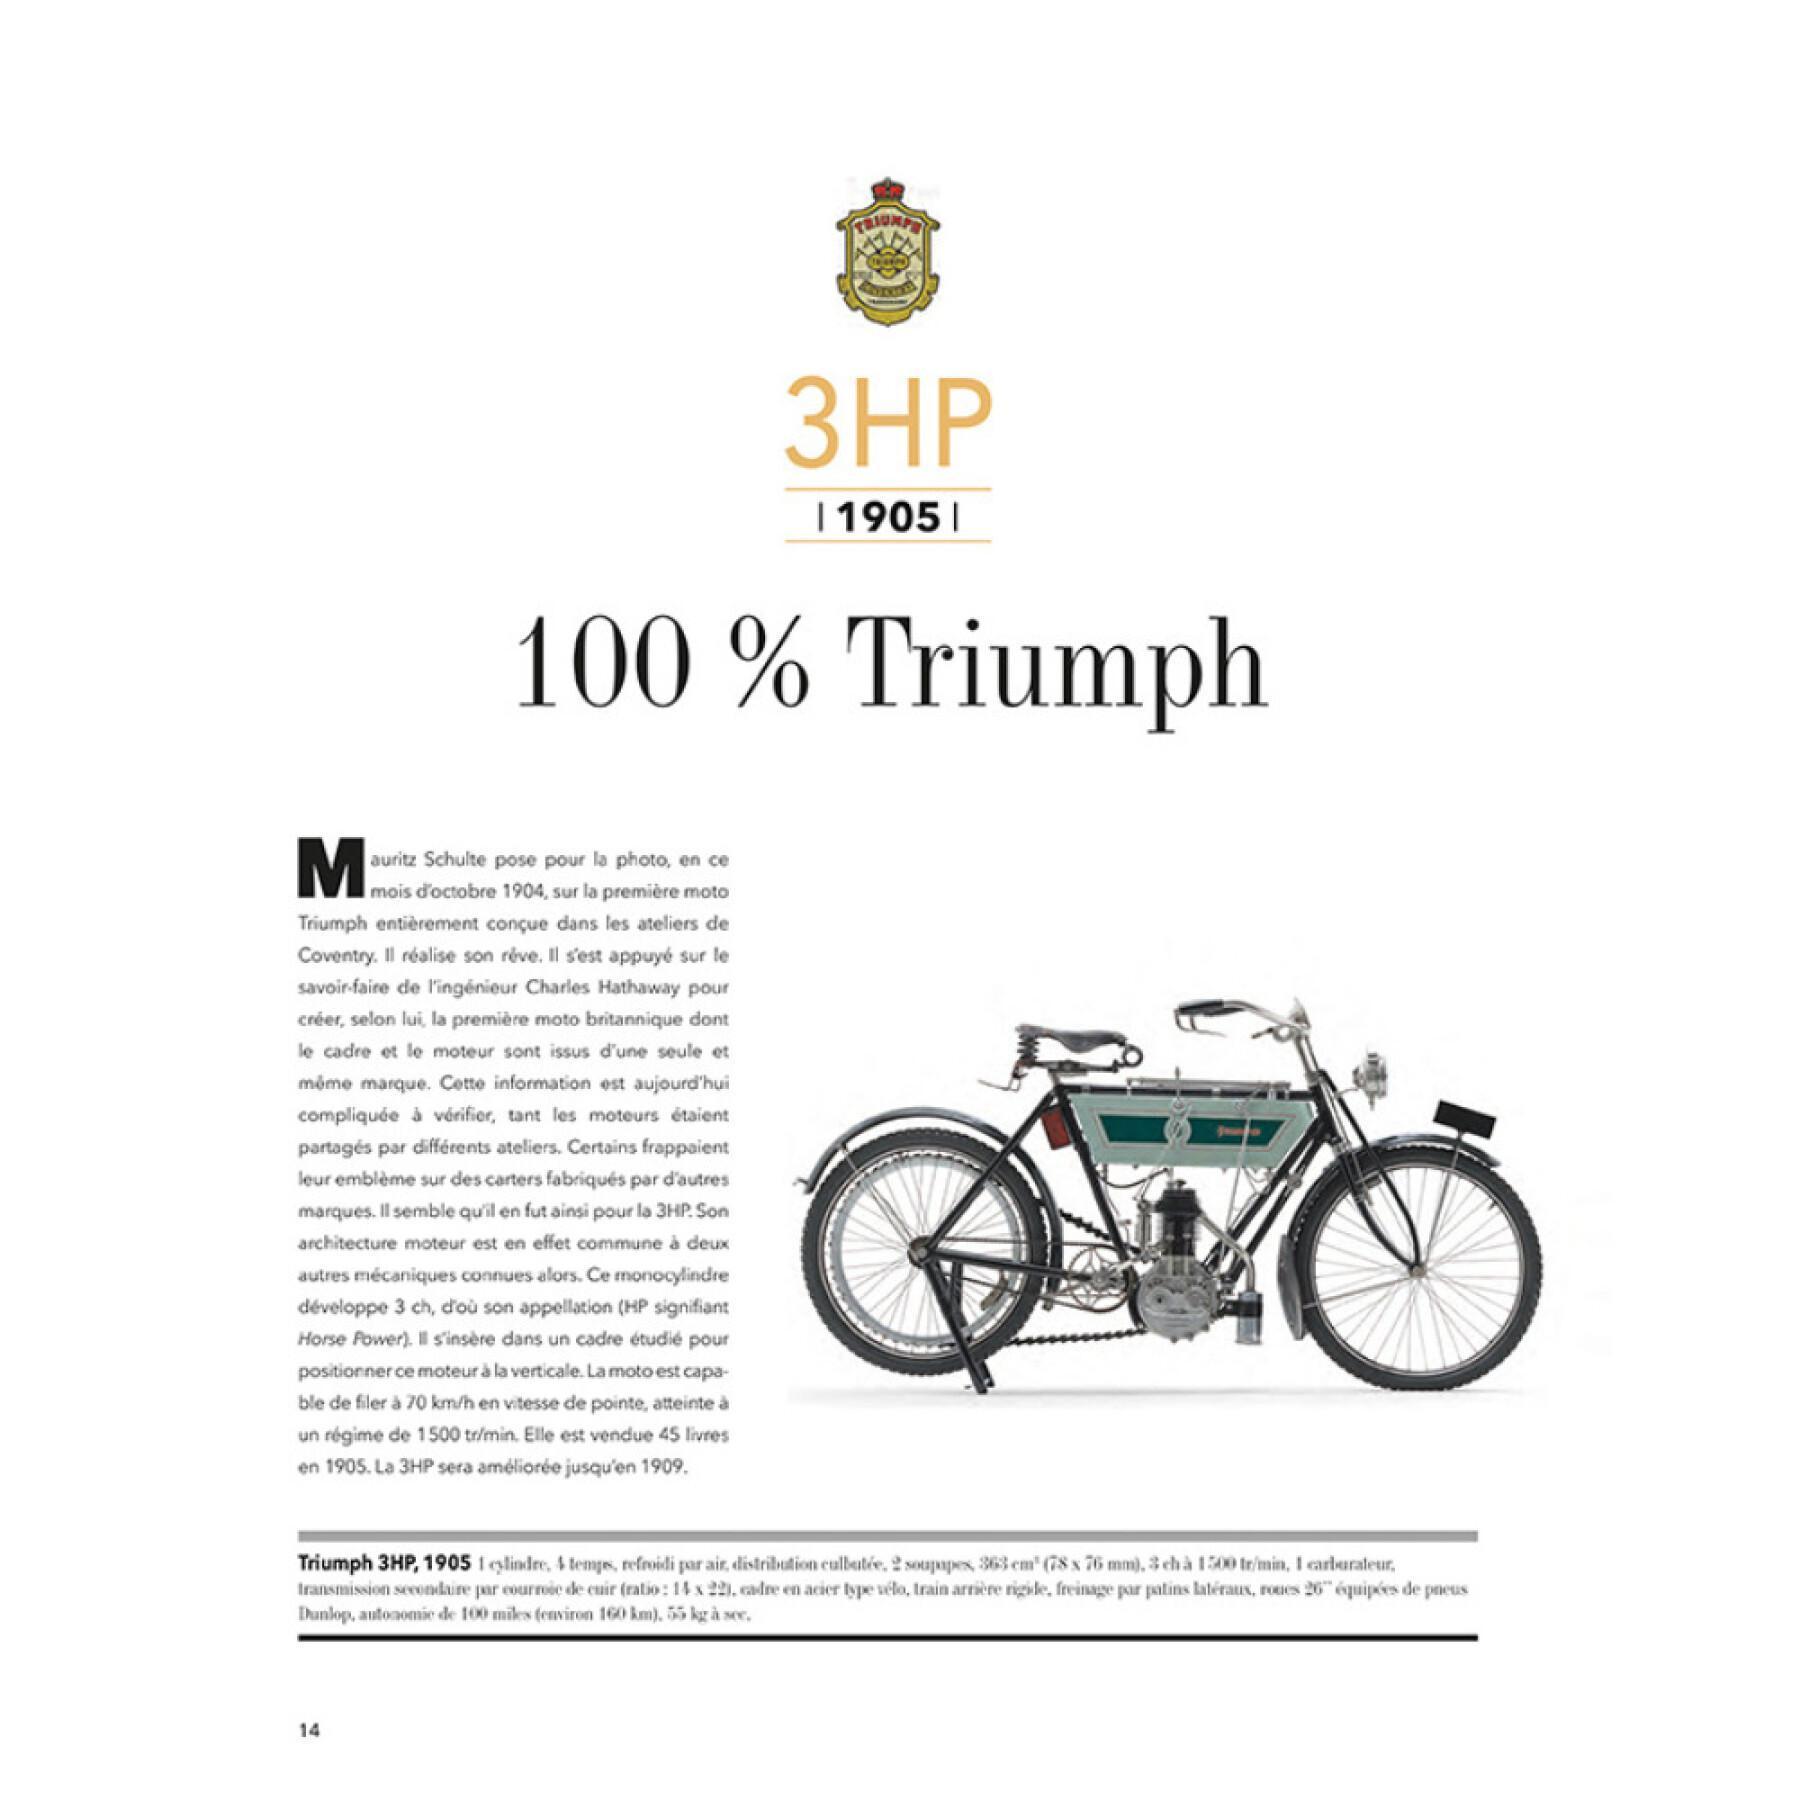 Boek engelse motorkunst ned Kubbick Triumph